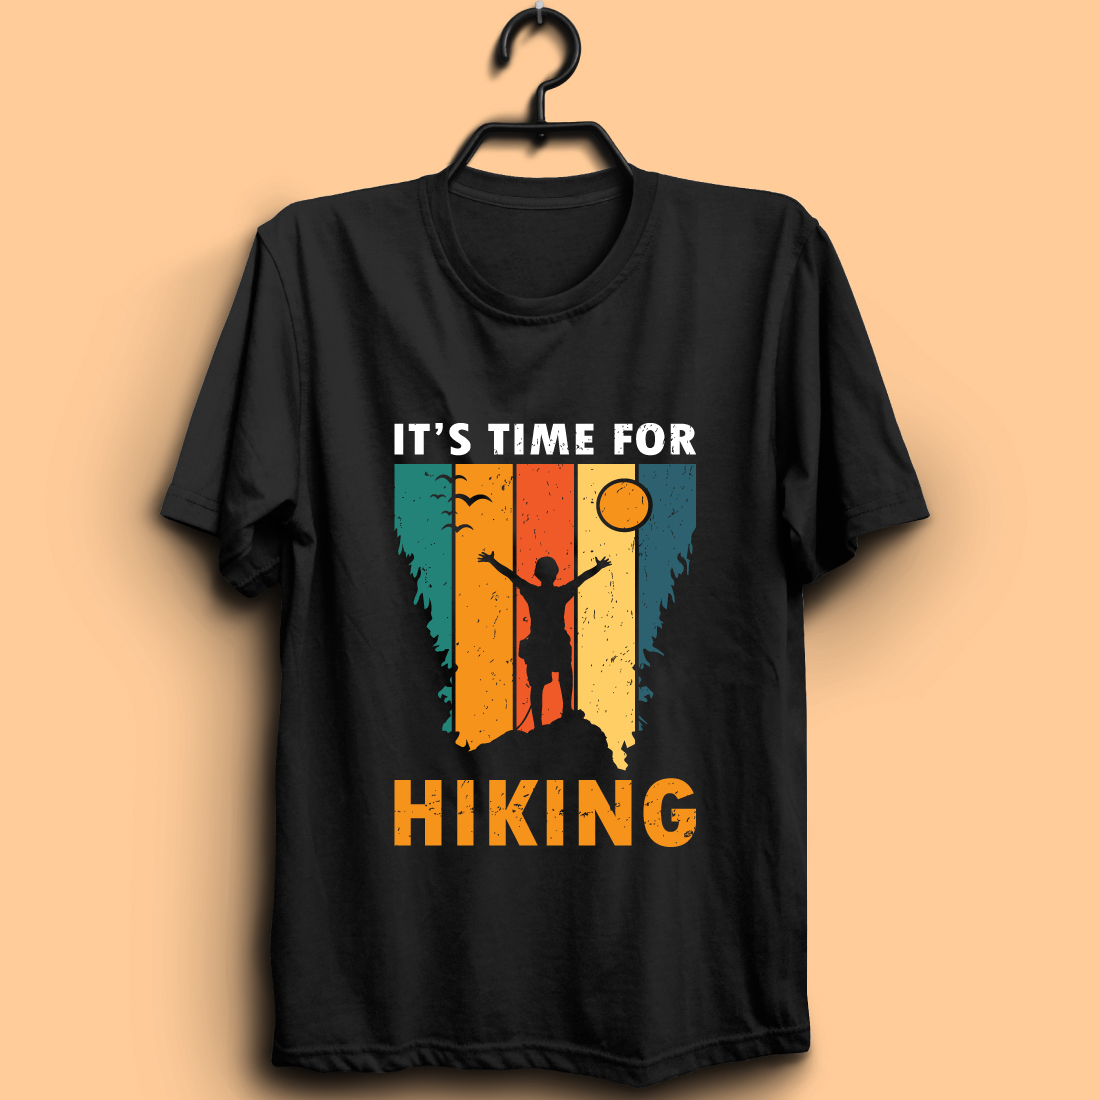 hiking t shirt design02 651